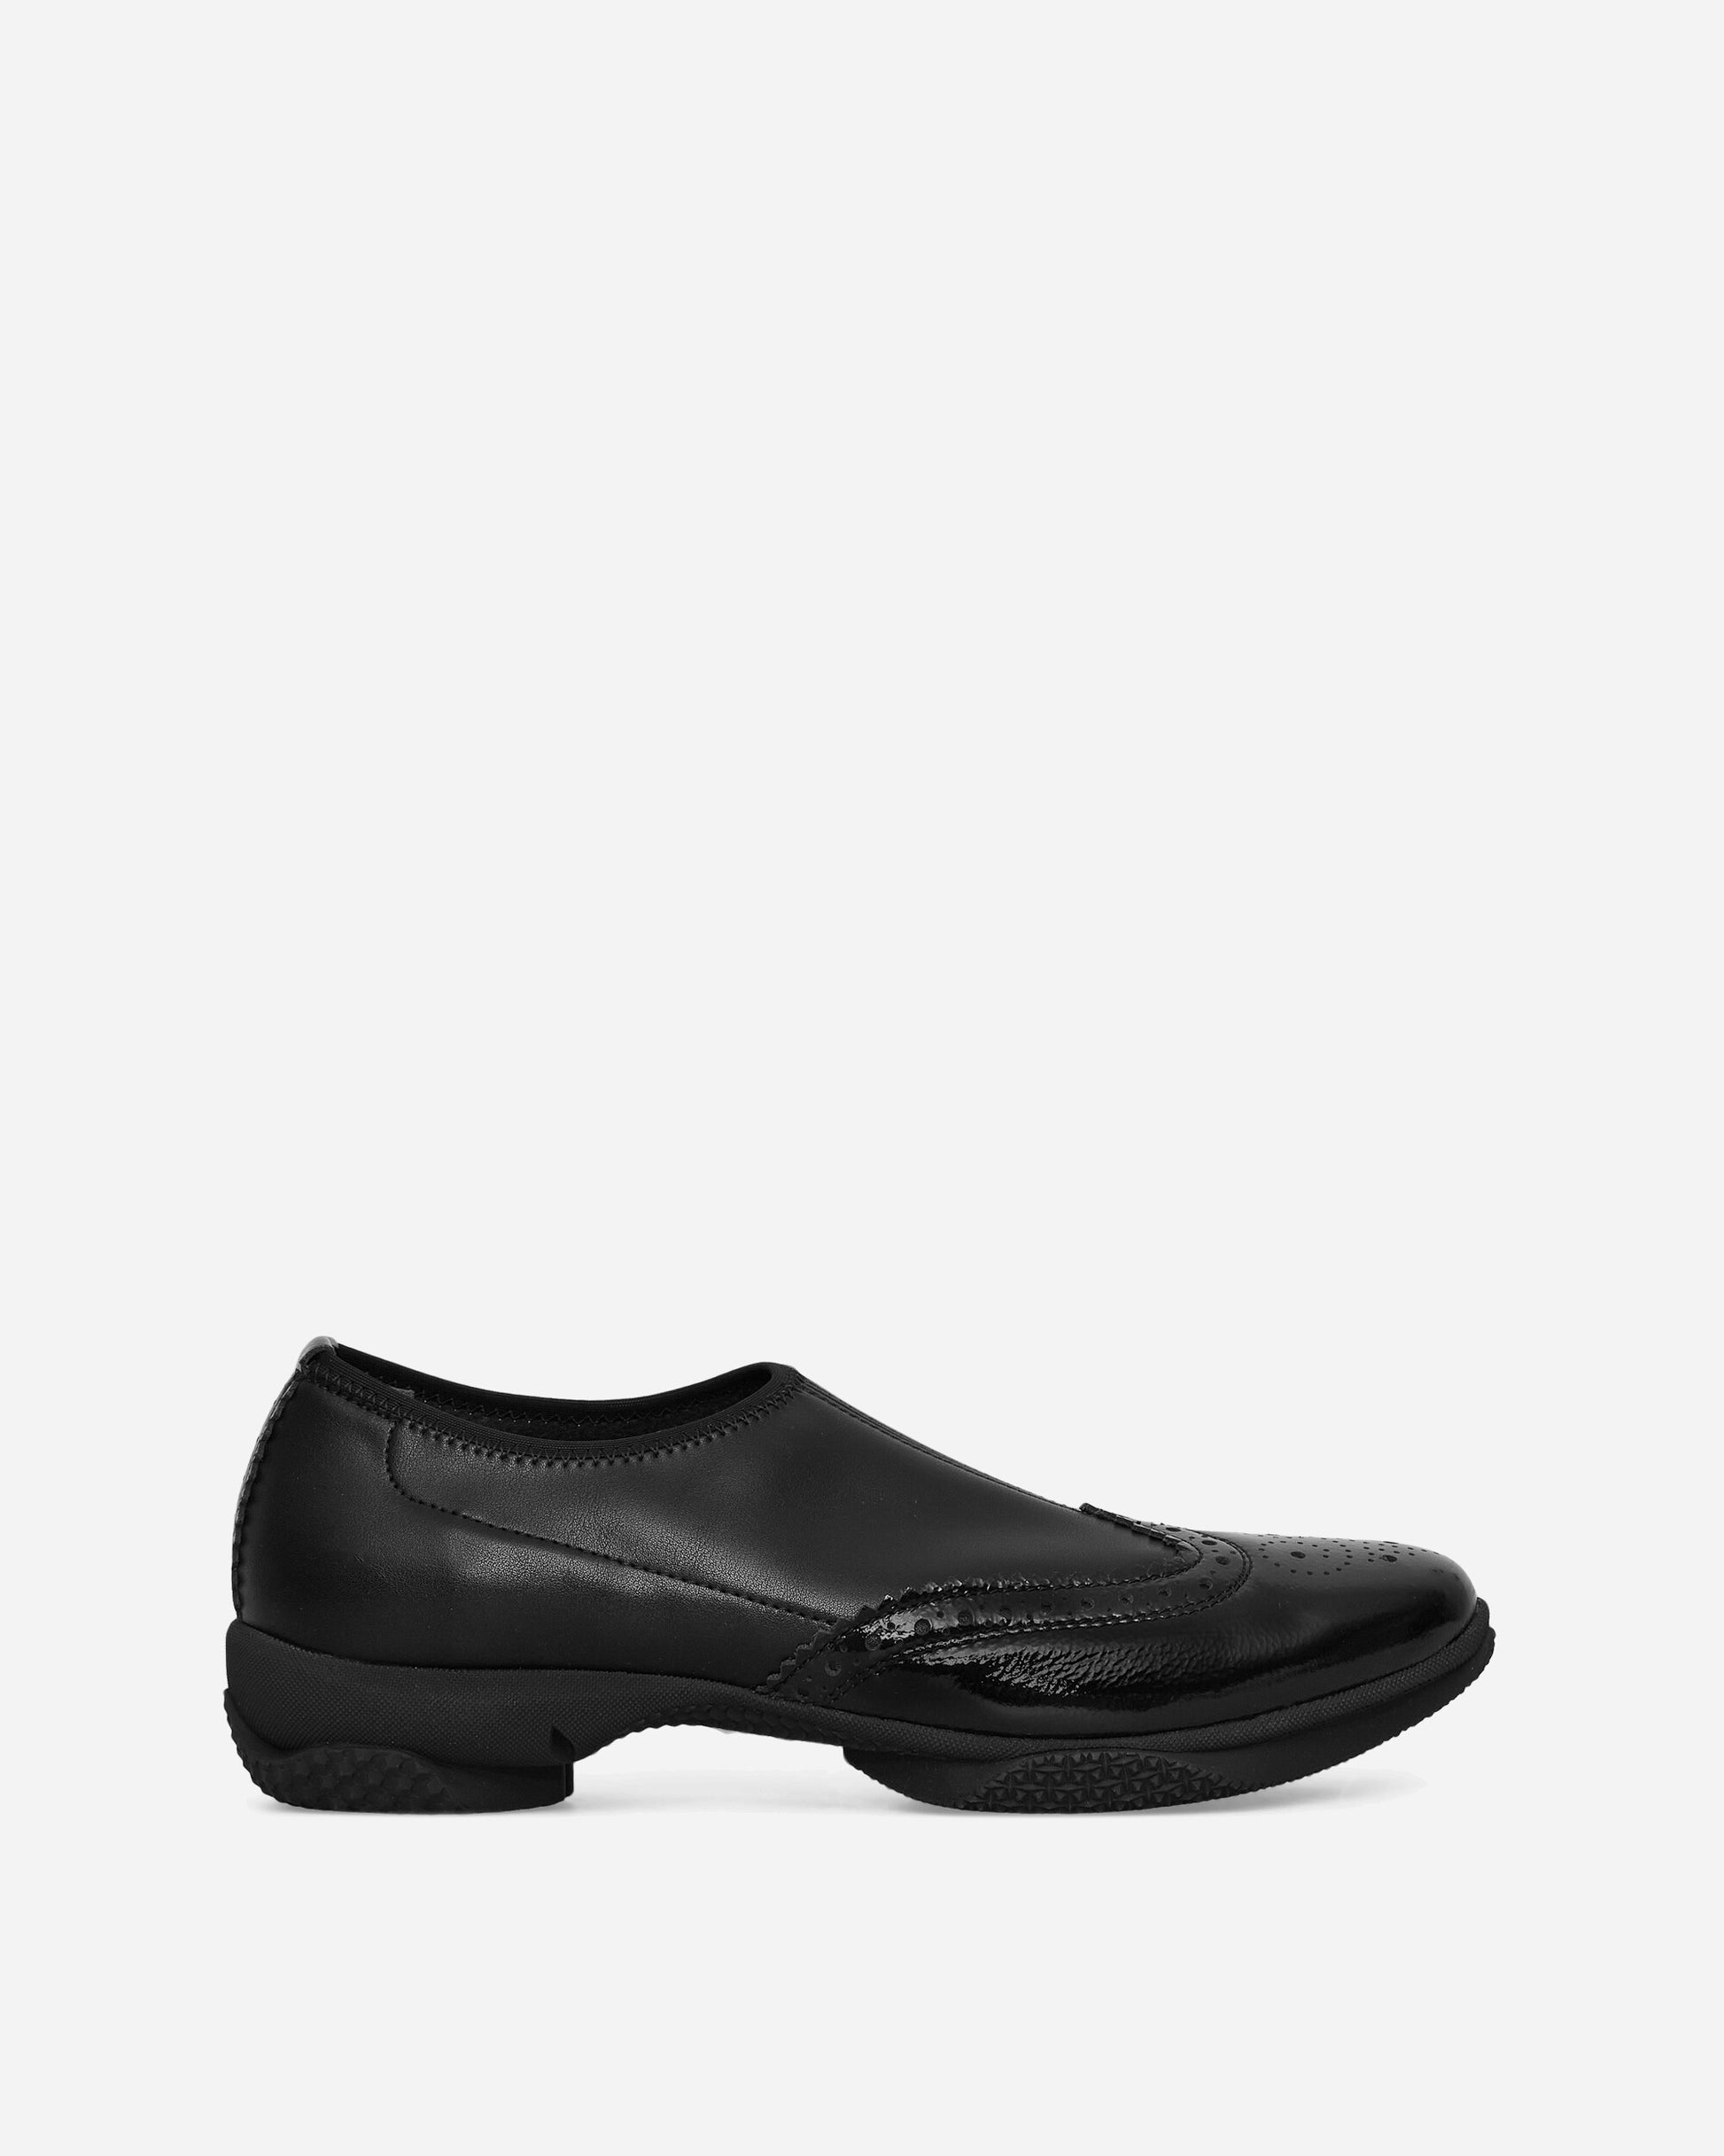 Kiko Kostadinov Wmns Sonia Slip On Brogue Onyx Black Classic Shoes Loafers KKWSS24SN02-160 001